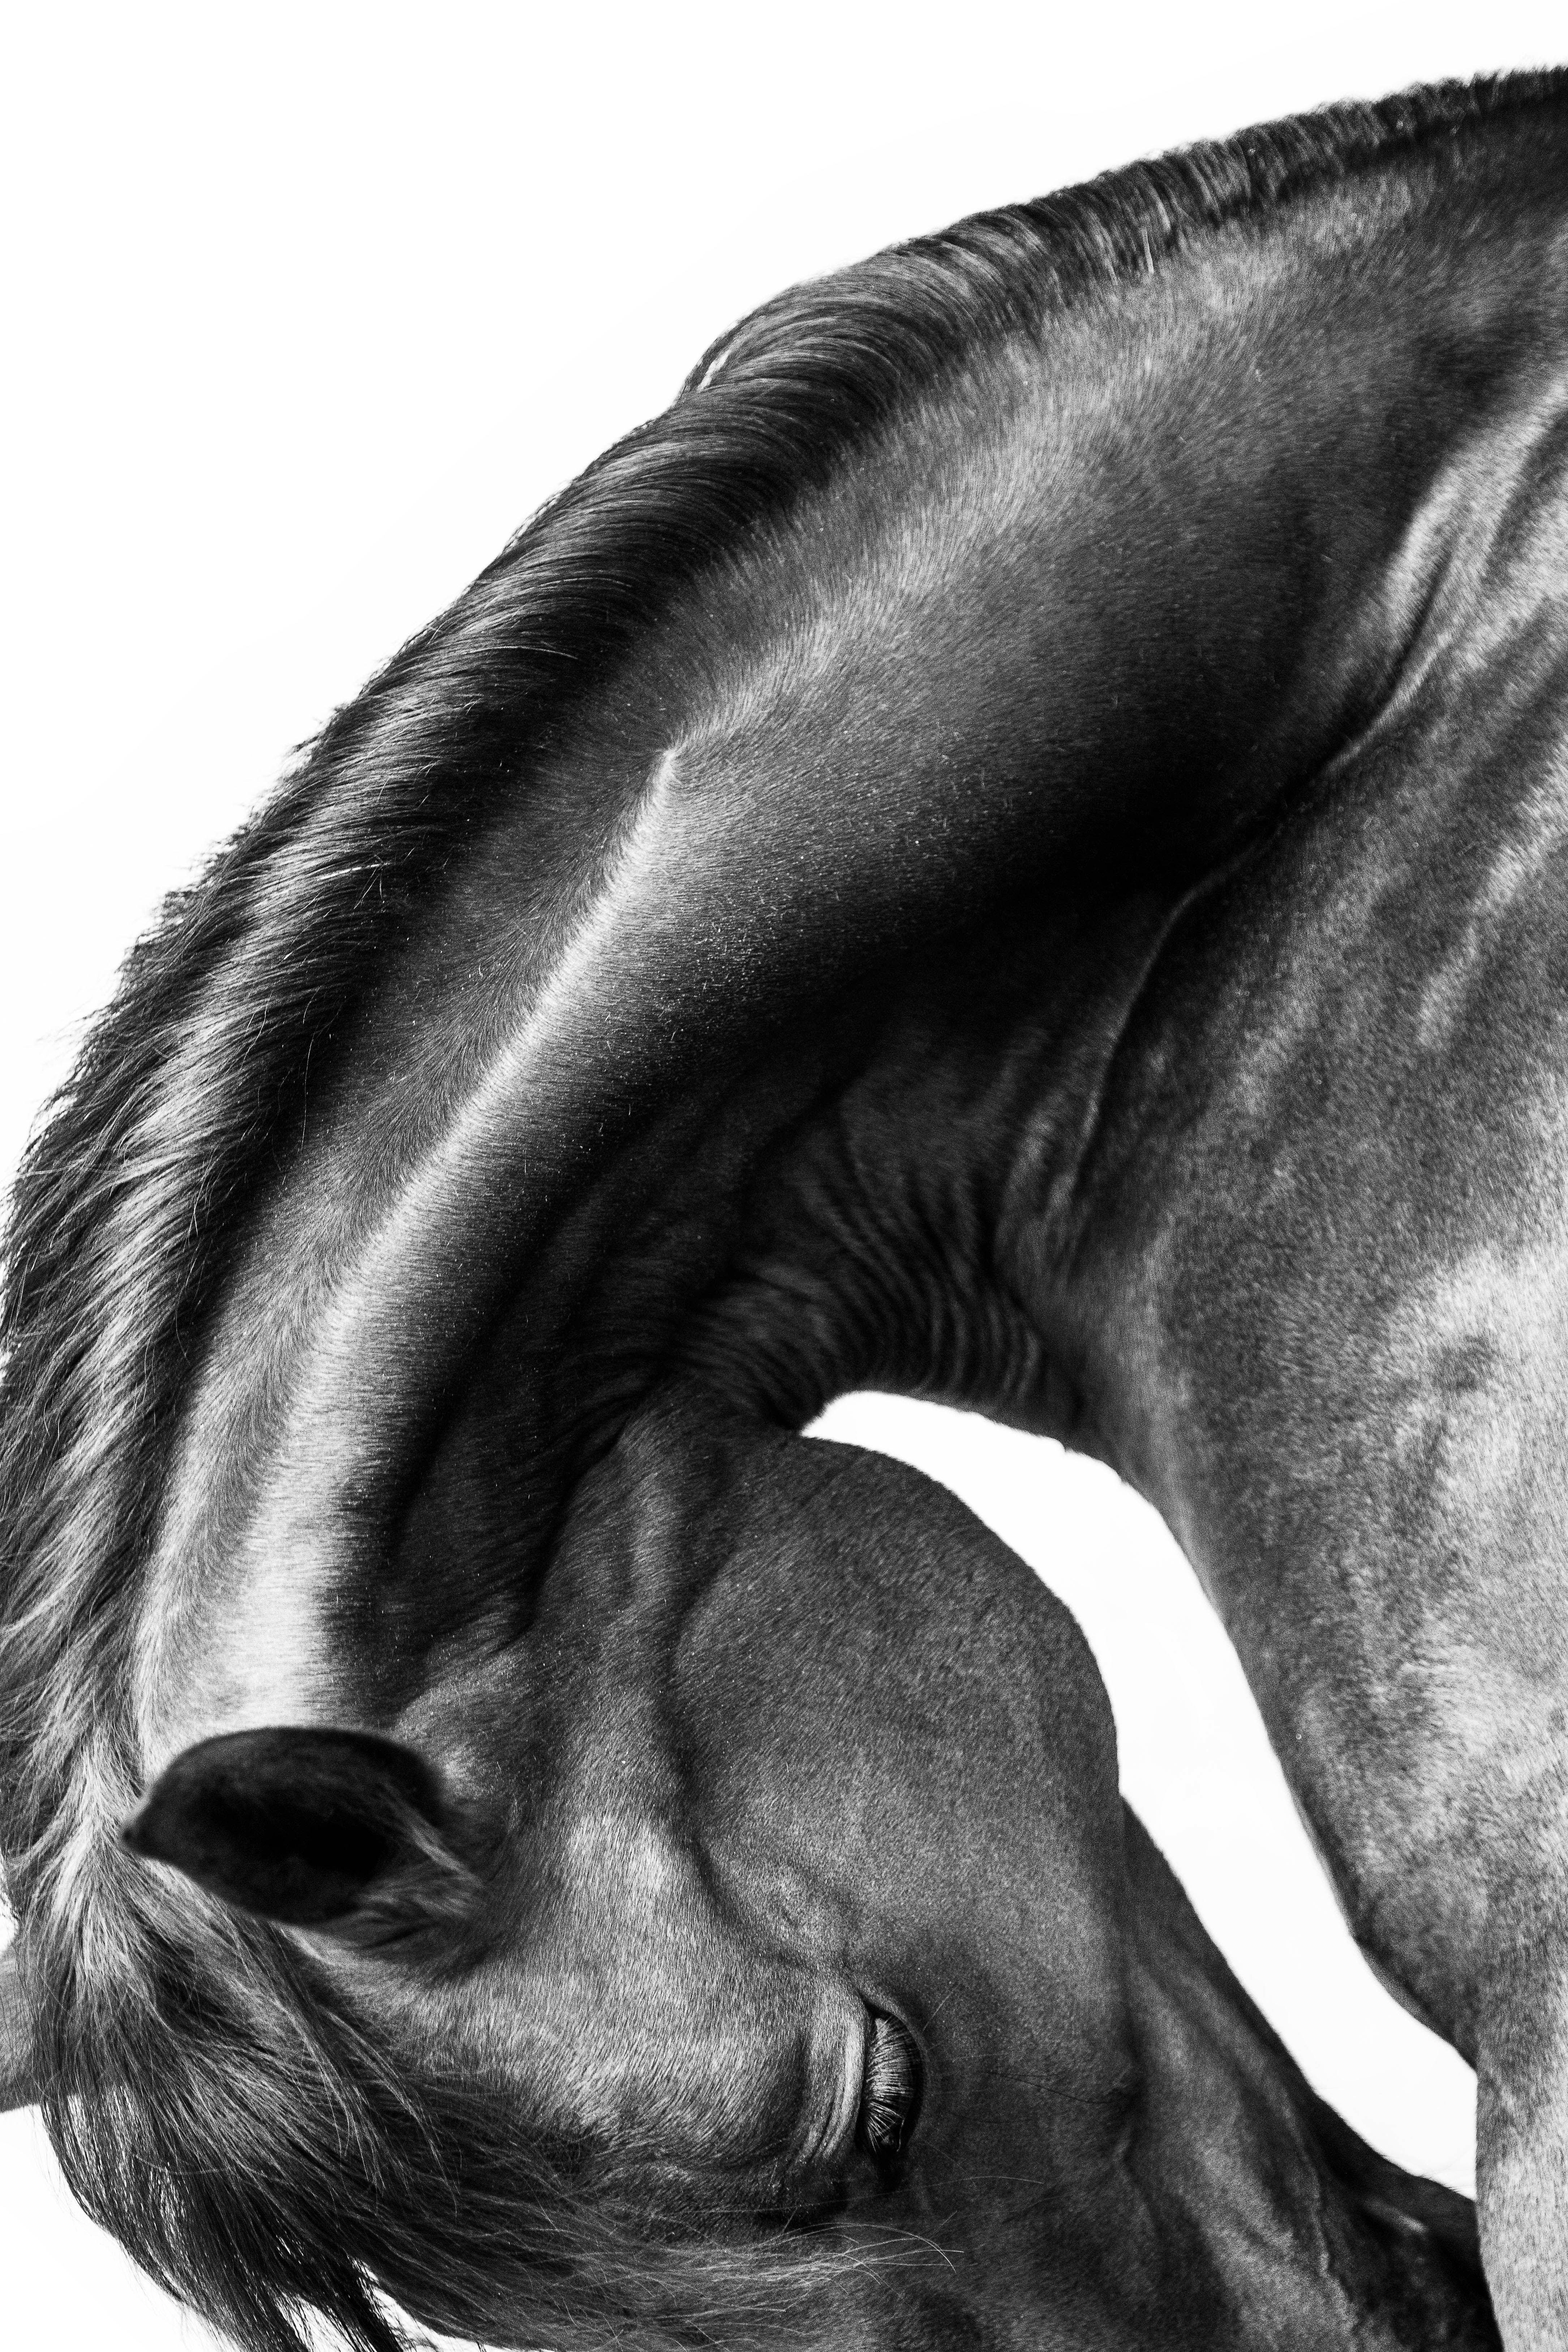 Power | Florida Equine Portrait Photographer | Nicole Schultz Photography - Power | Florida Equine Portrait Photographer | Nicole Schultz Photography -   19 beauty Photography black and white ideas